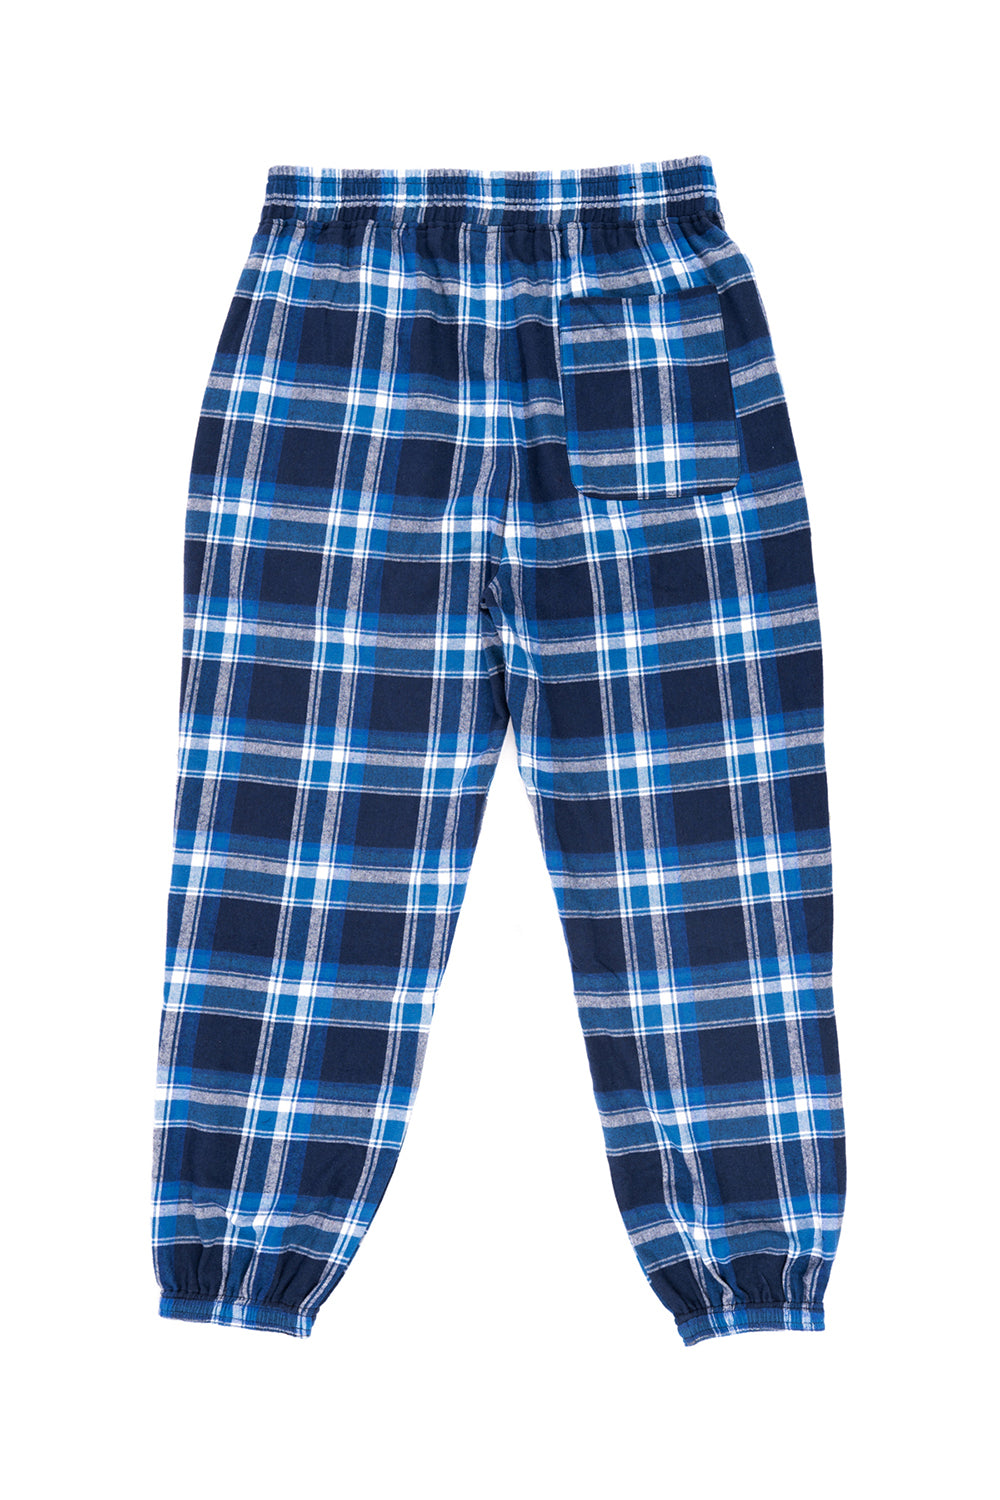 Burnside B8810 Mens Flannel Jogger Sweatpants w/ Pockets Blue/White Flat Back